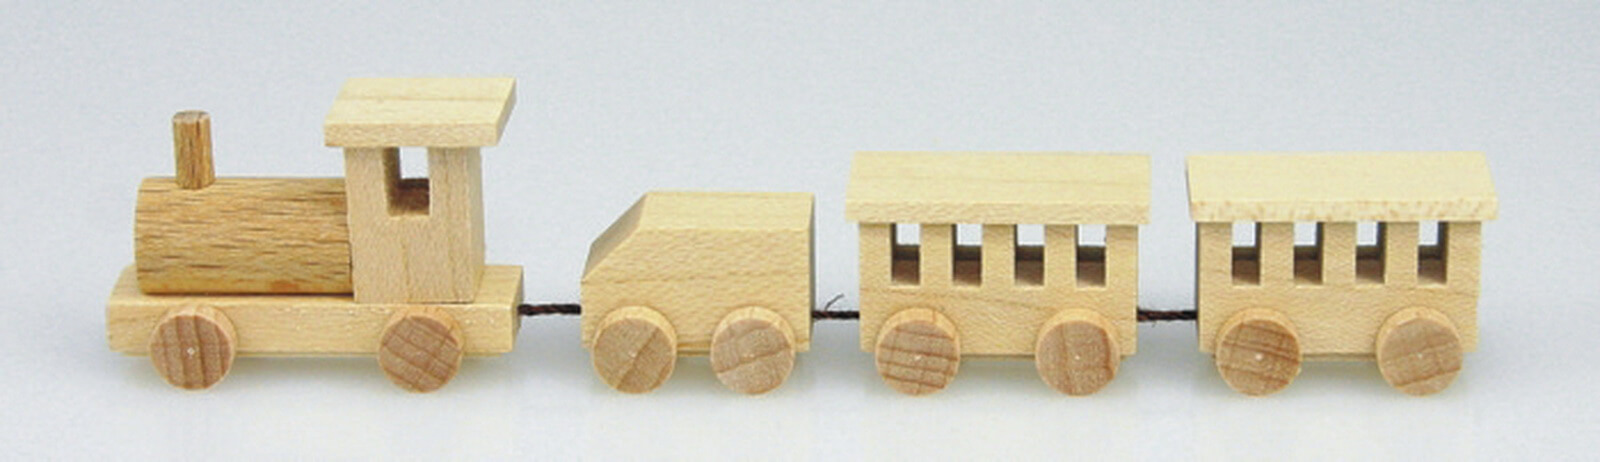 Mini - Holzeisenbahn, natur von Stephan Kaden